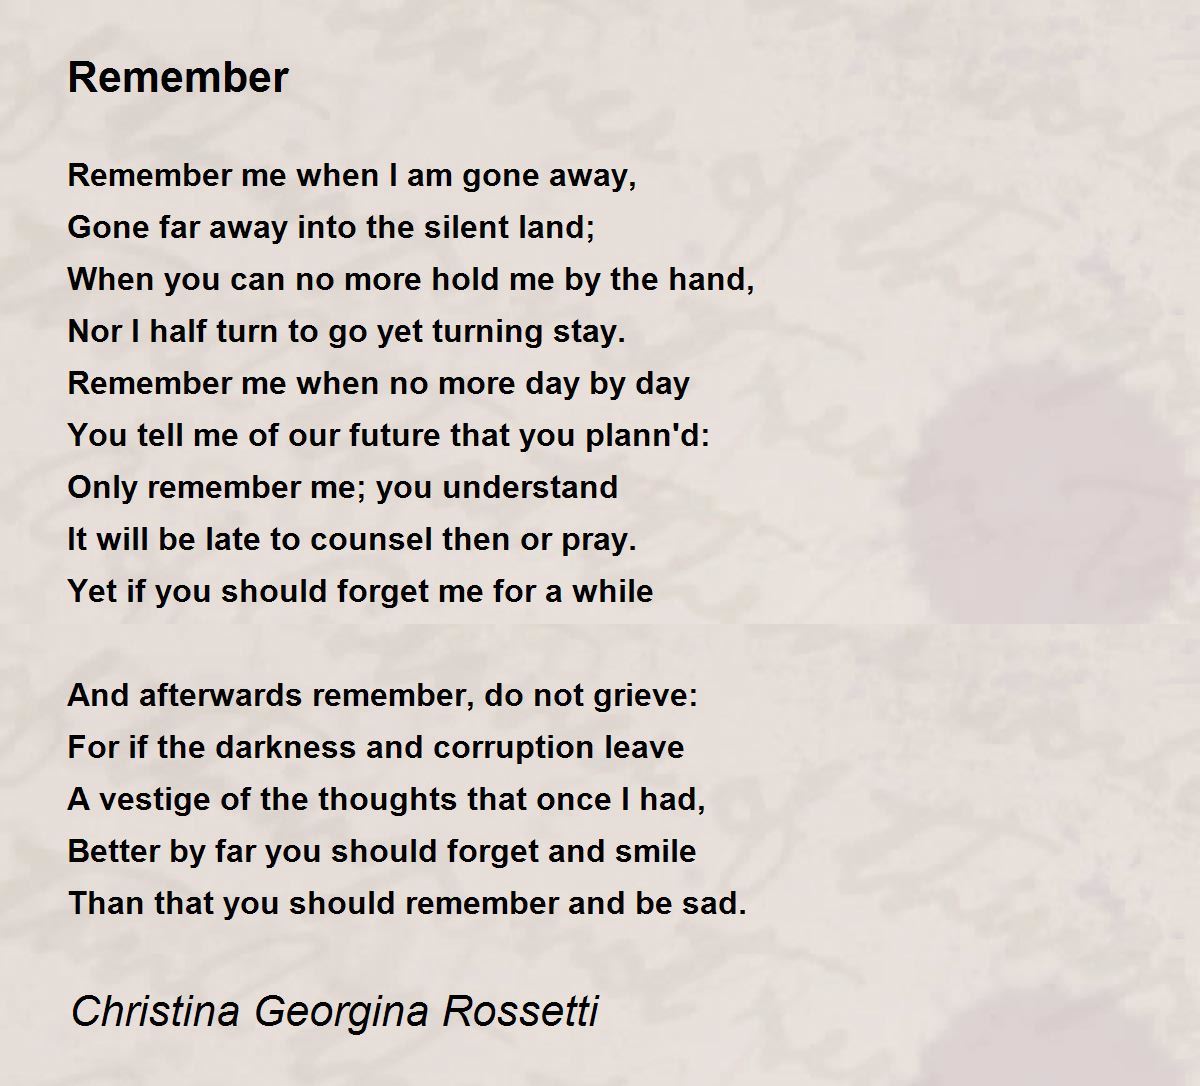 christina rossetti memory poem analysis